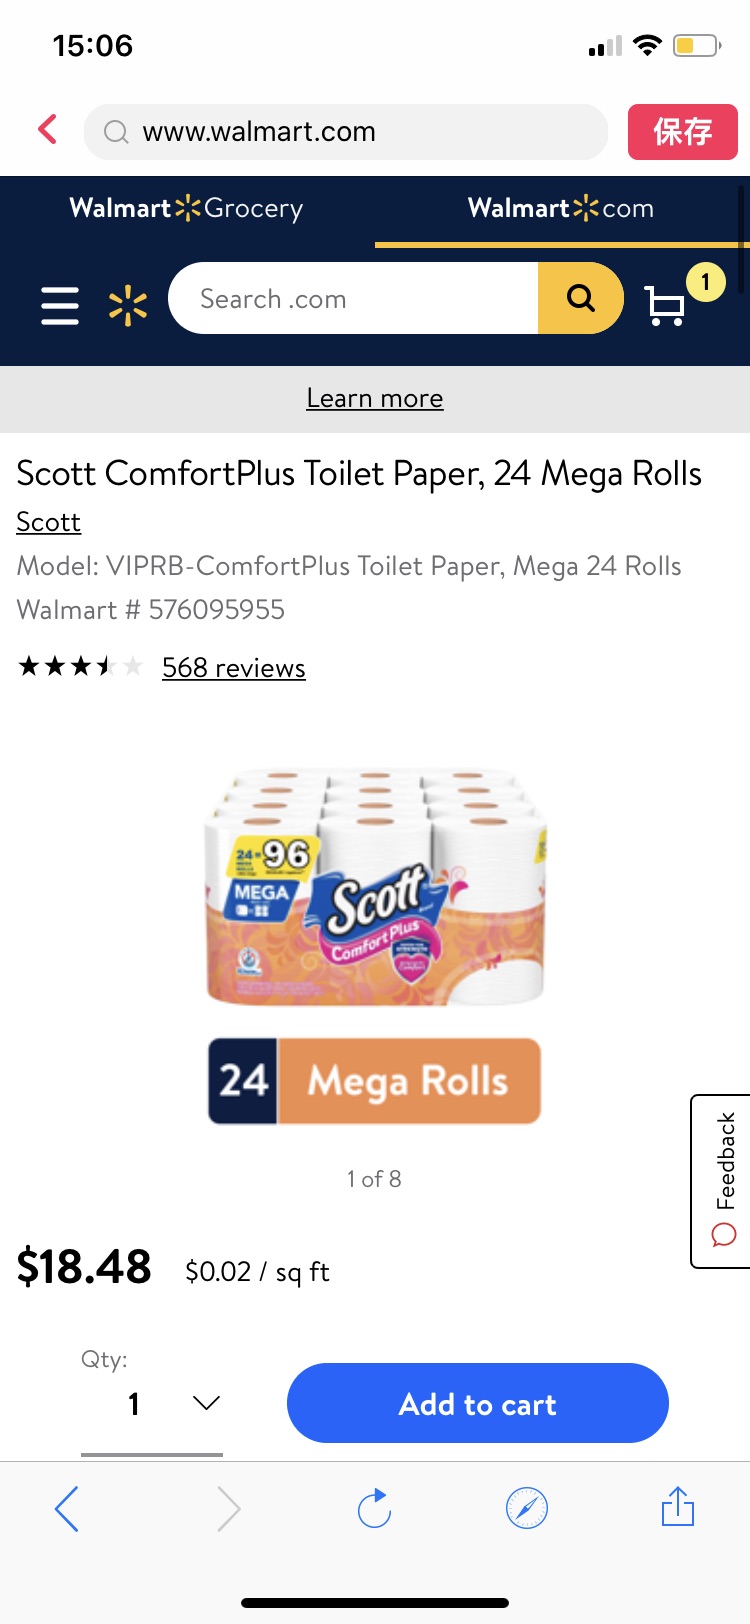 Scott ComfortPlus Toilet Paper, 24 Mega Rolls - Walmart.com - 厕纸